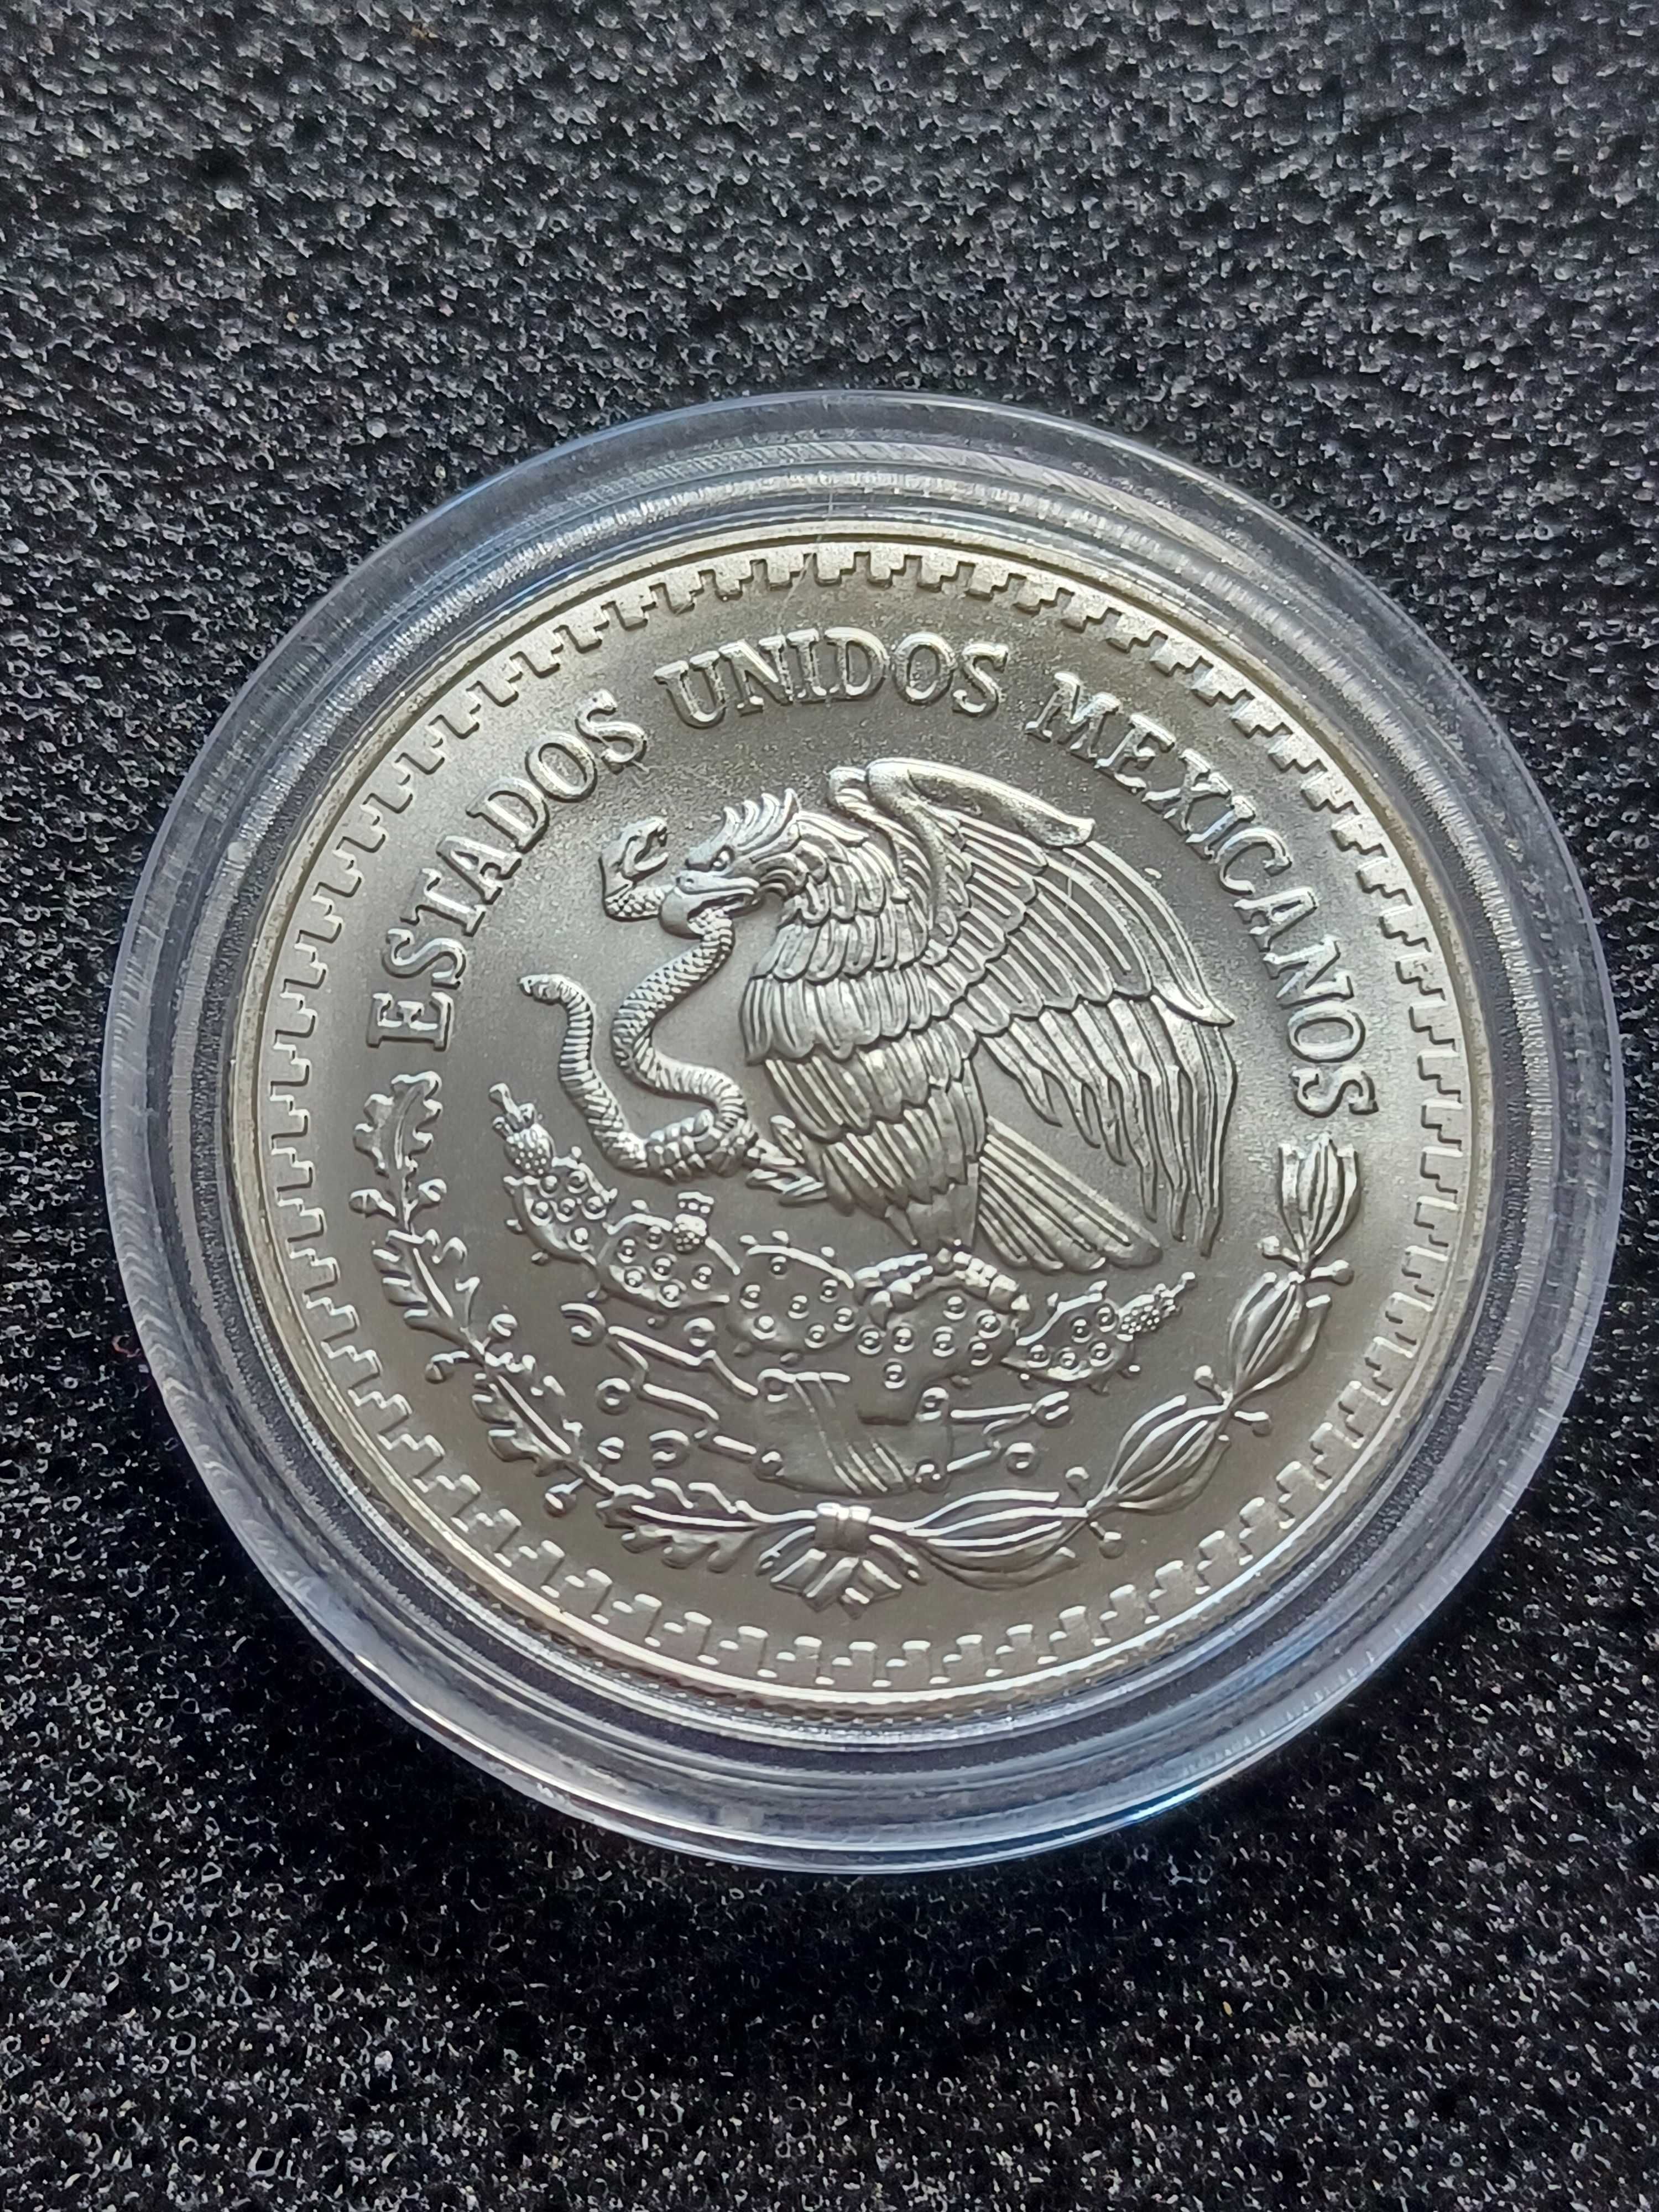 Set 4 monede 3 Oz argint 999 Austria 2011, Mexic 2002 in capsula